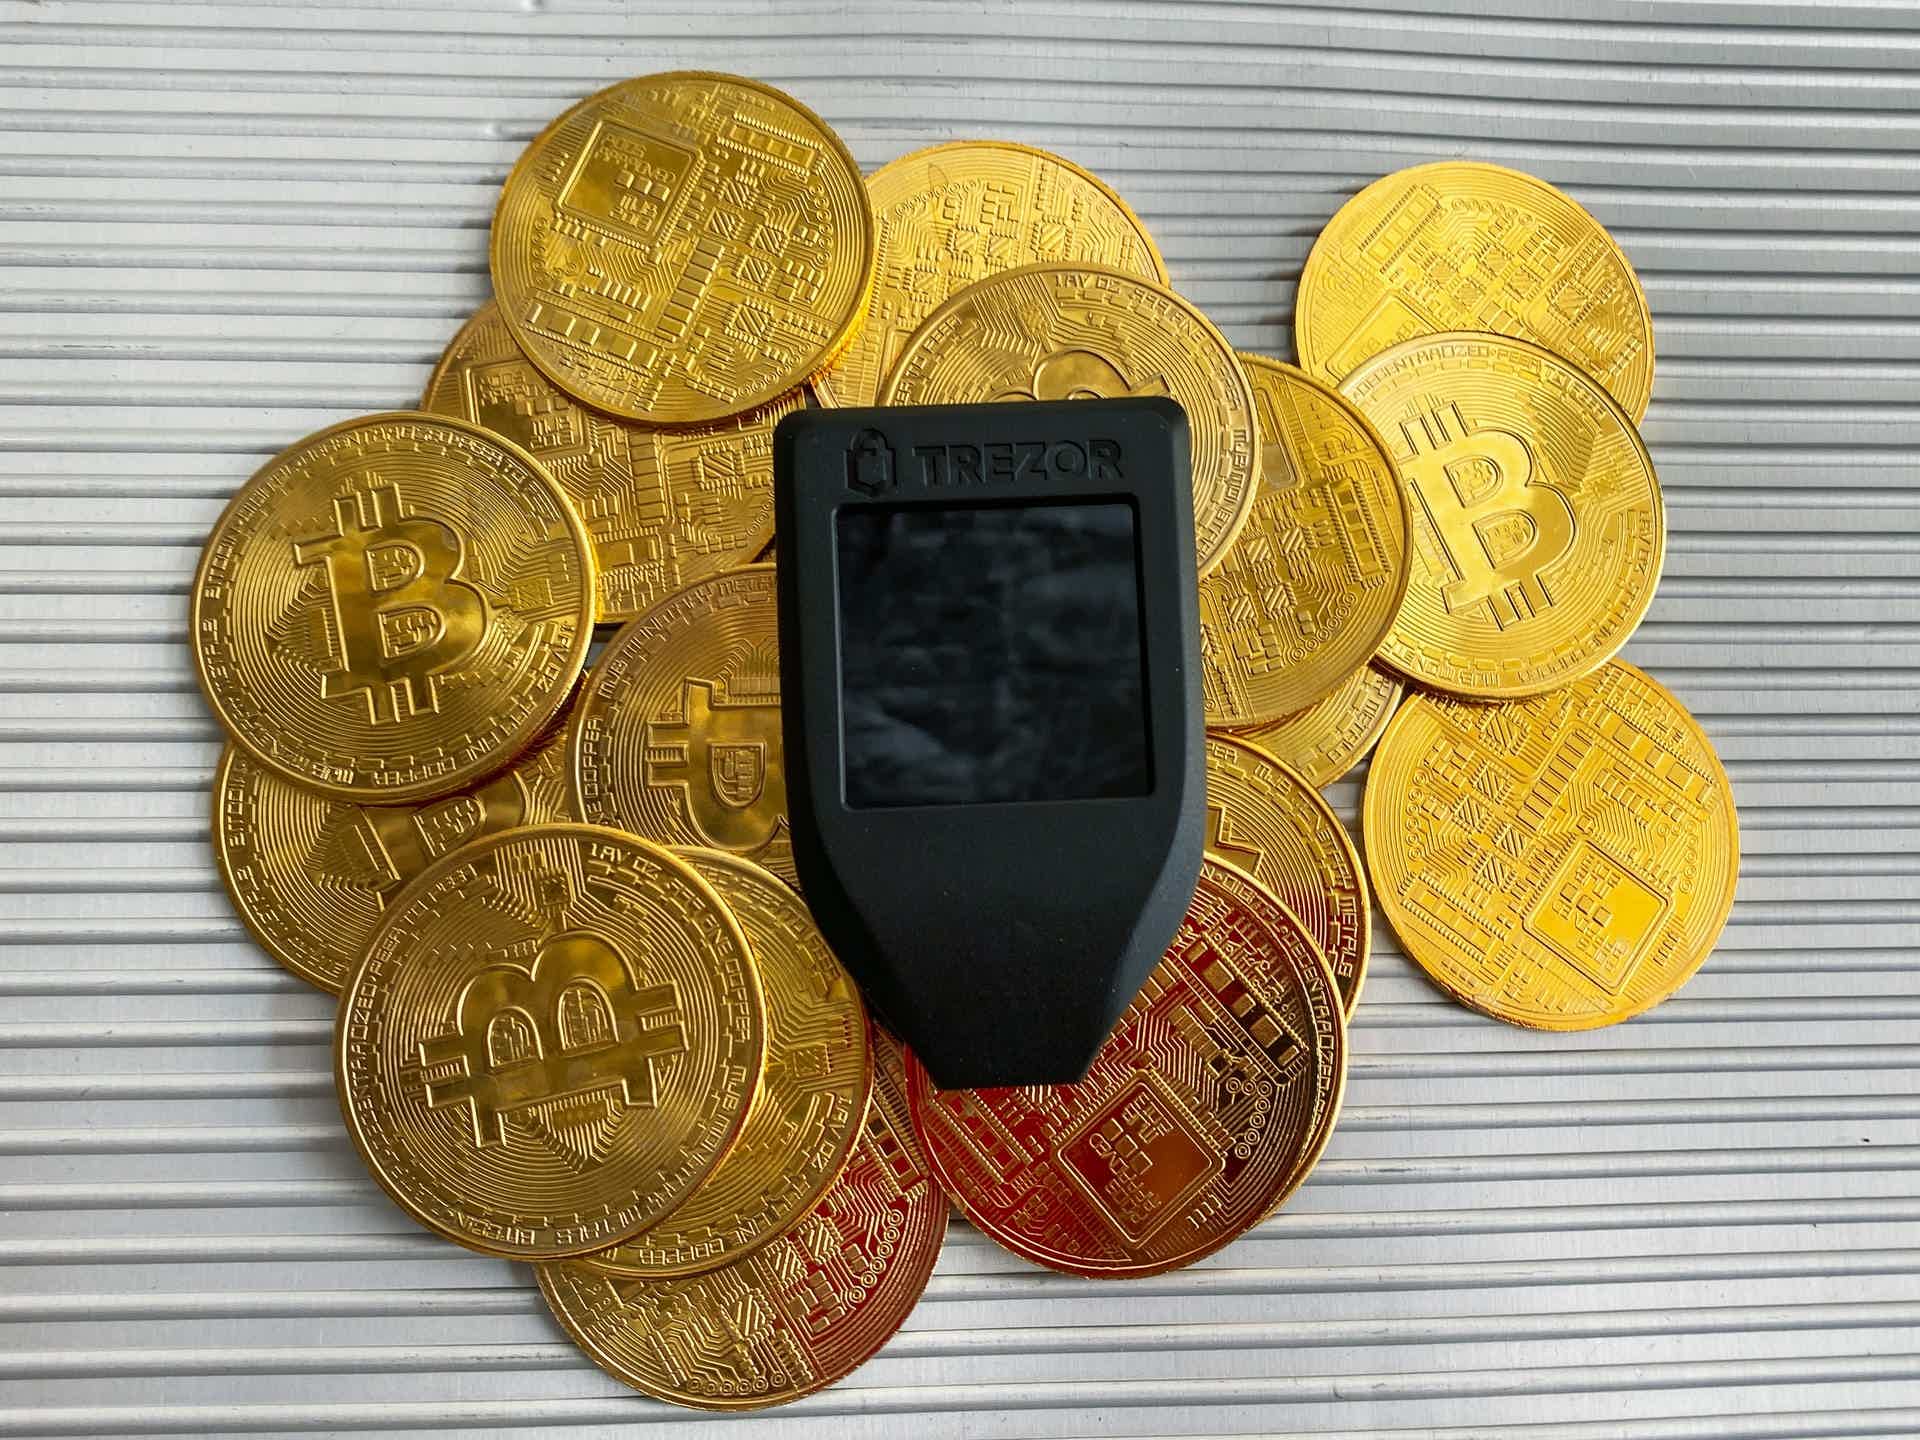 Trezor hardware wallet and bitcoins